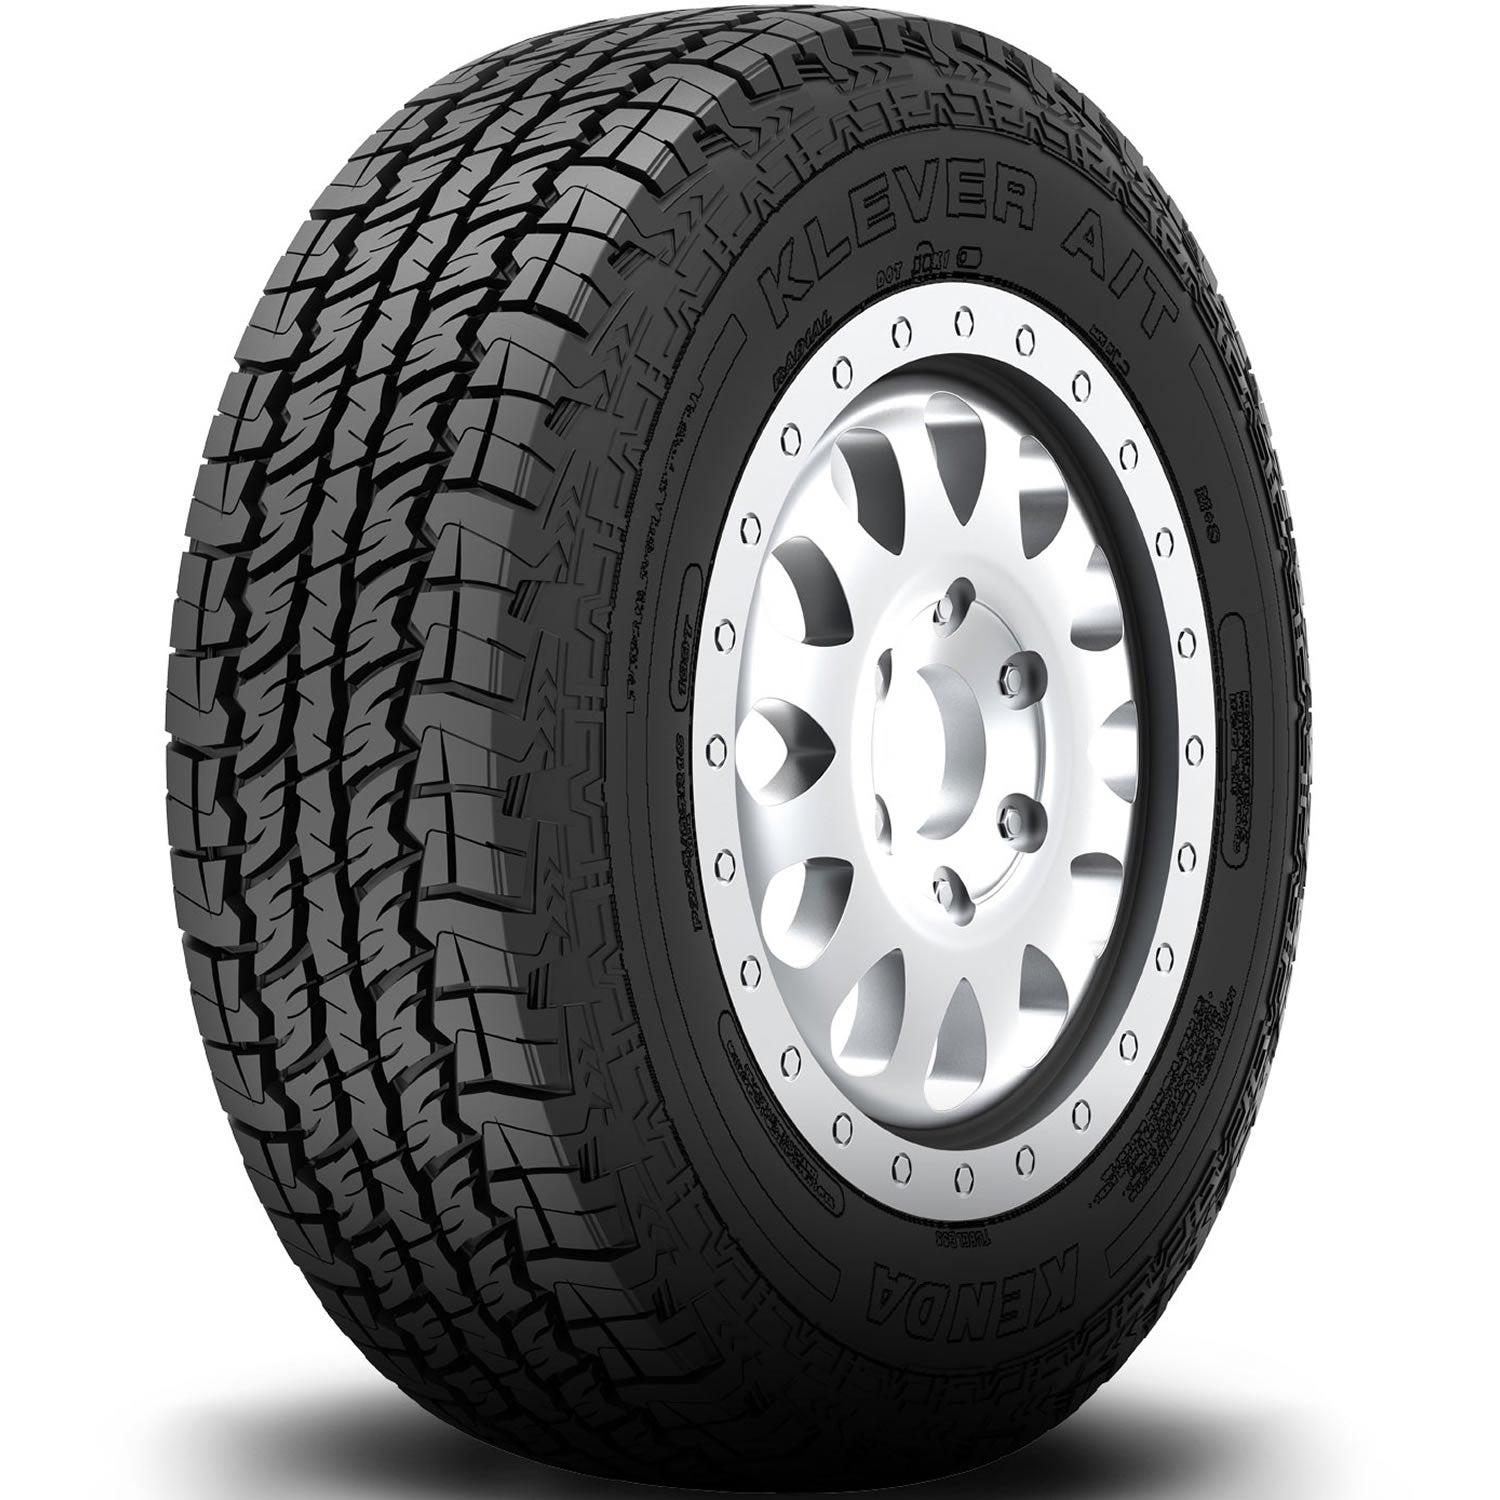 KENDA KLEVER AT P235/75R17 (30.9X9.3R 17) Tires